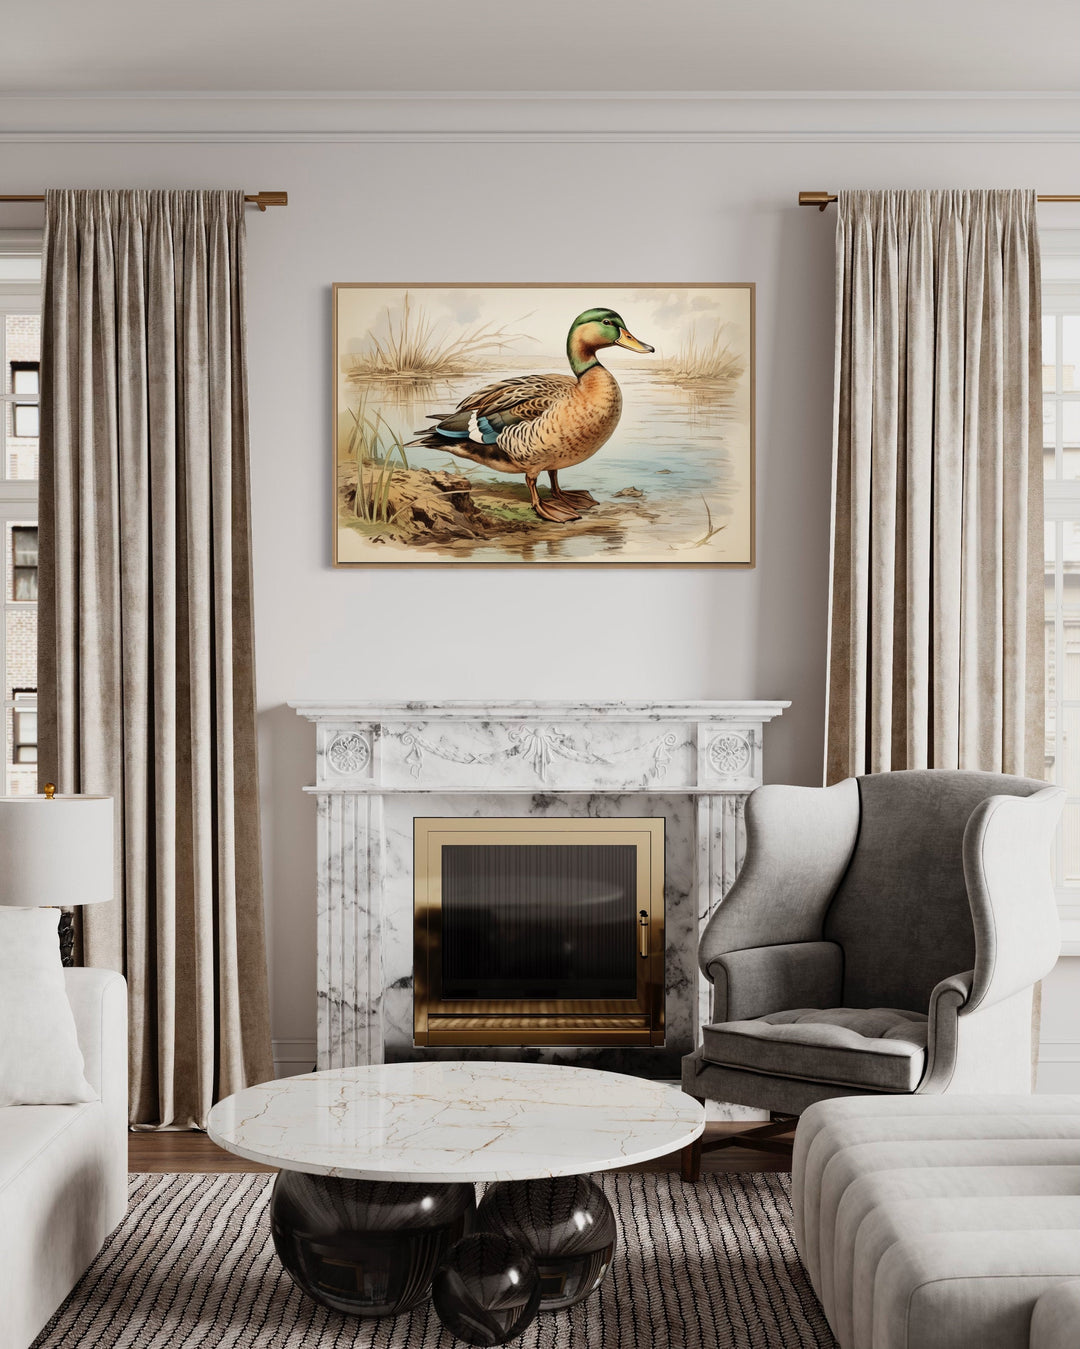 Mallard Duck Vintage Rustic Framed Canvas Wall Art above fireplace